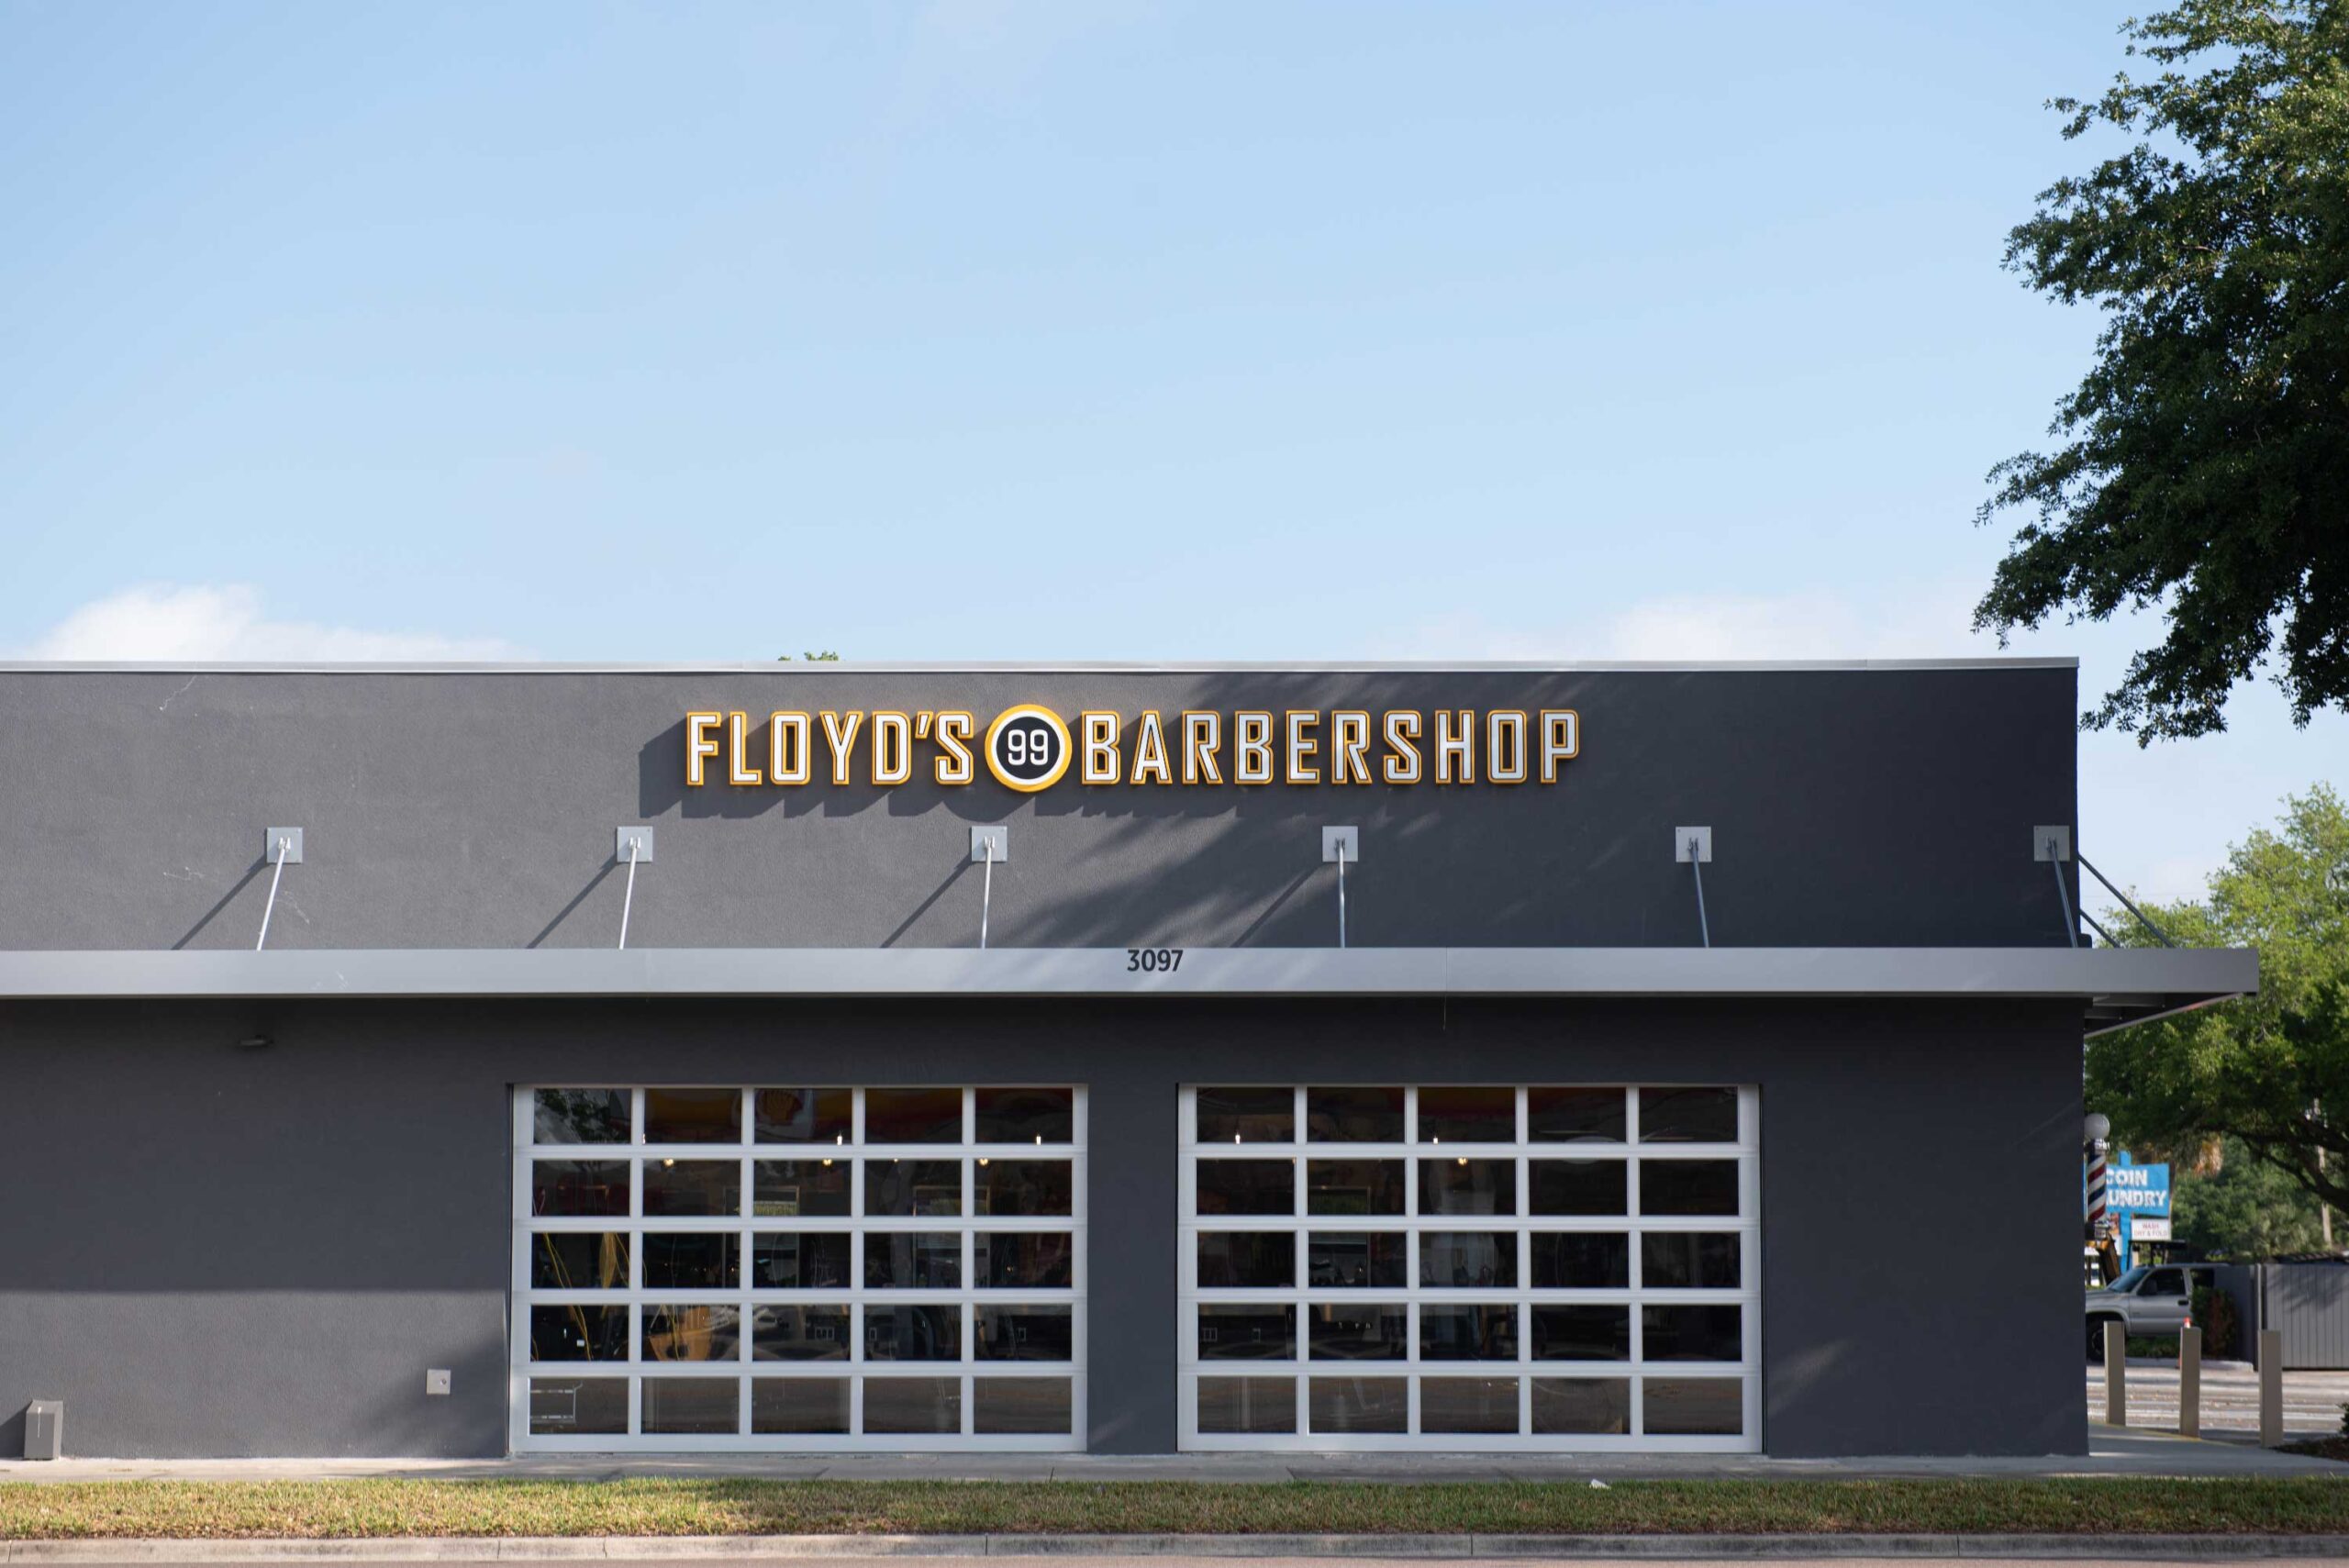 Floyd's Barbershop exterior with garage doors closed